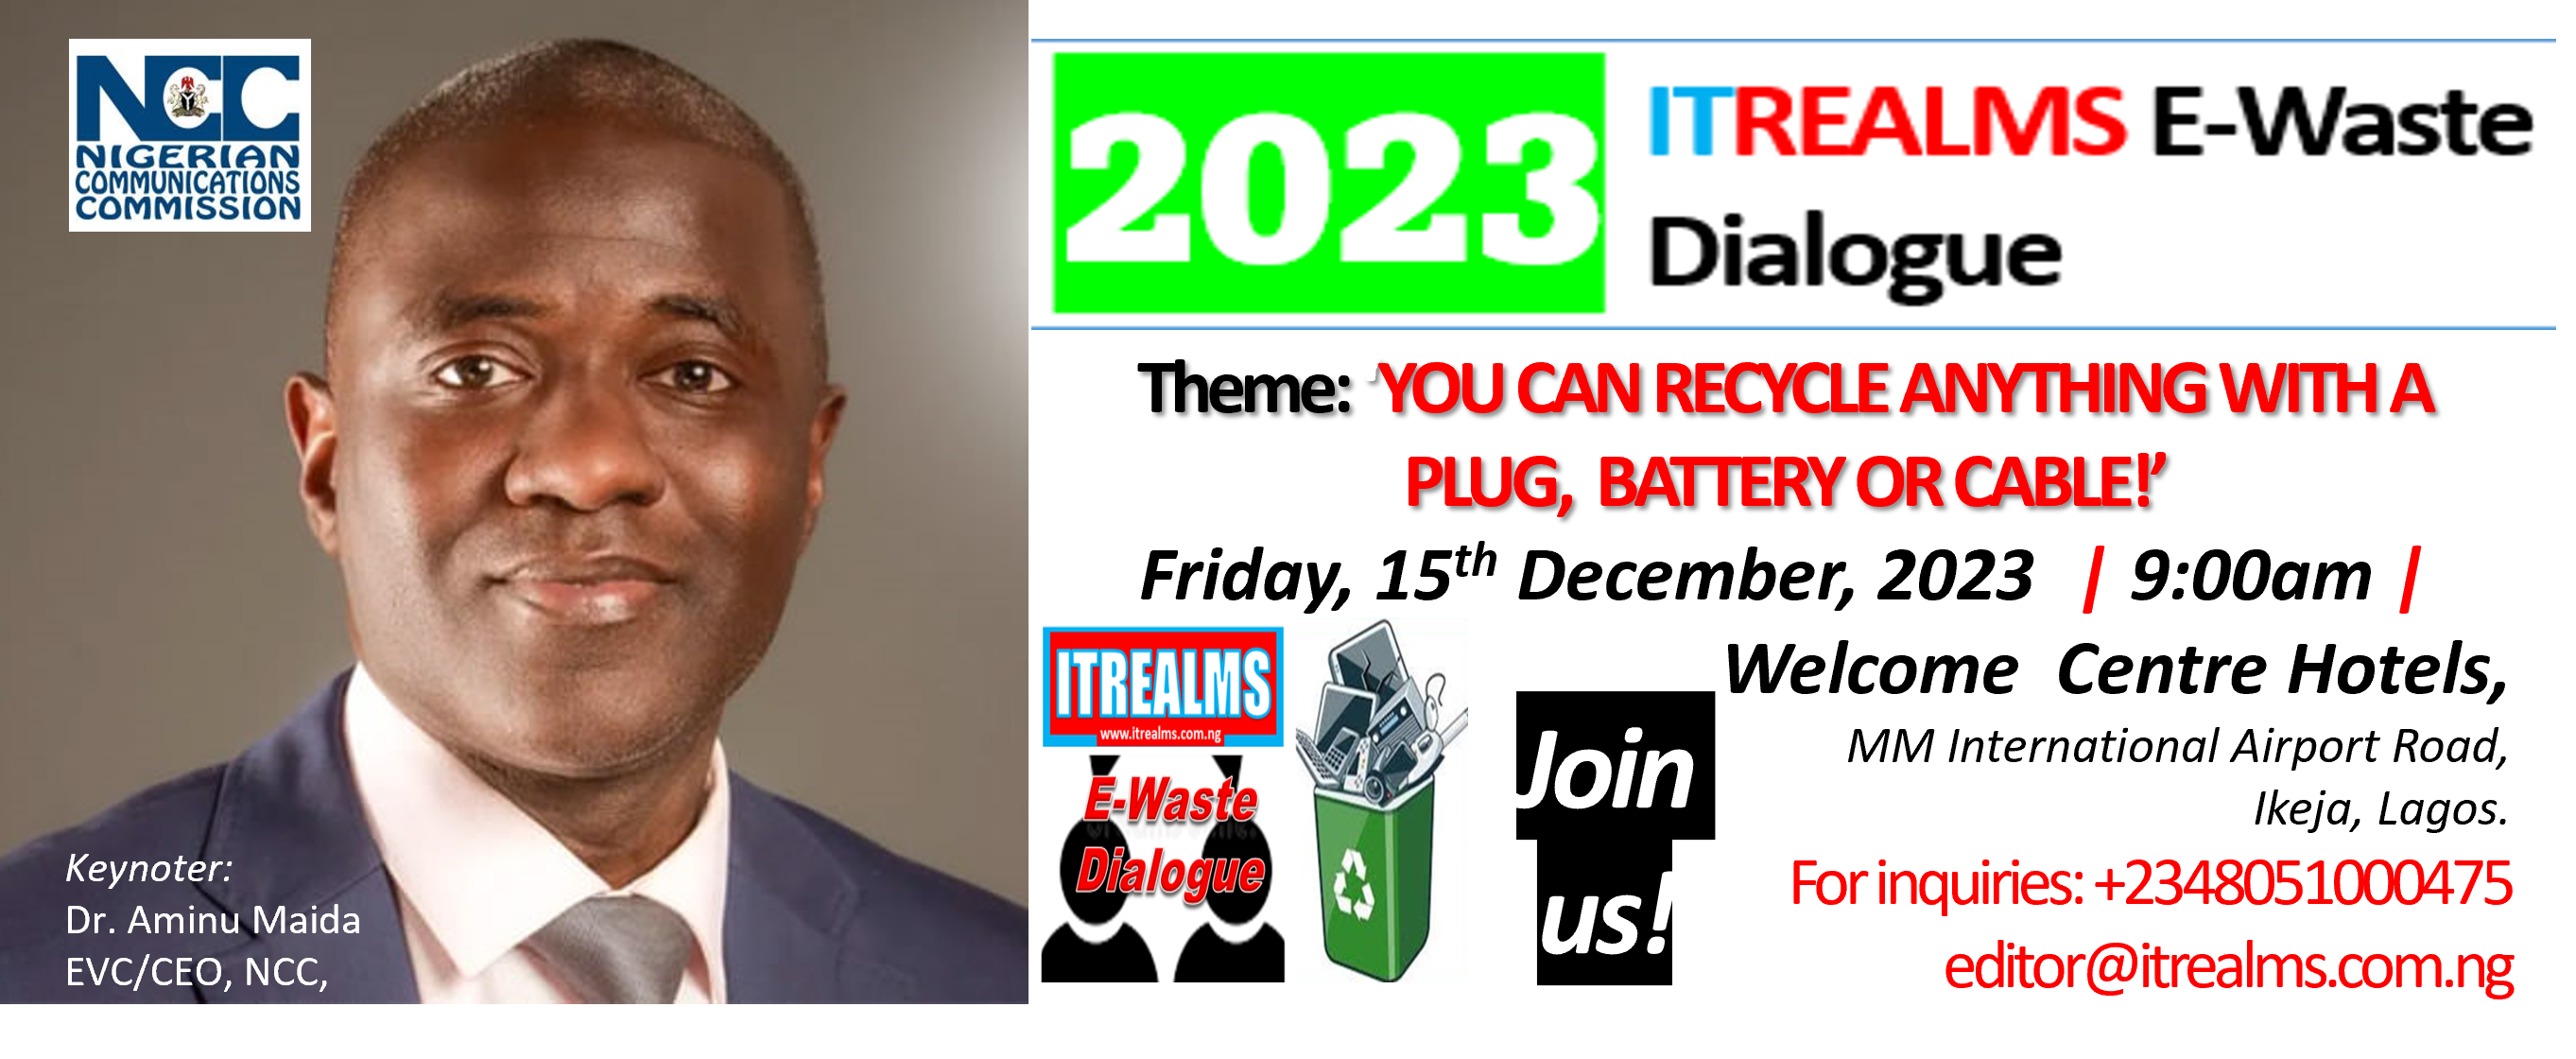 Keynoter - EVC-NCC Maida for 2023 ITREALMS E-Waste Dialogue